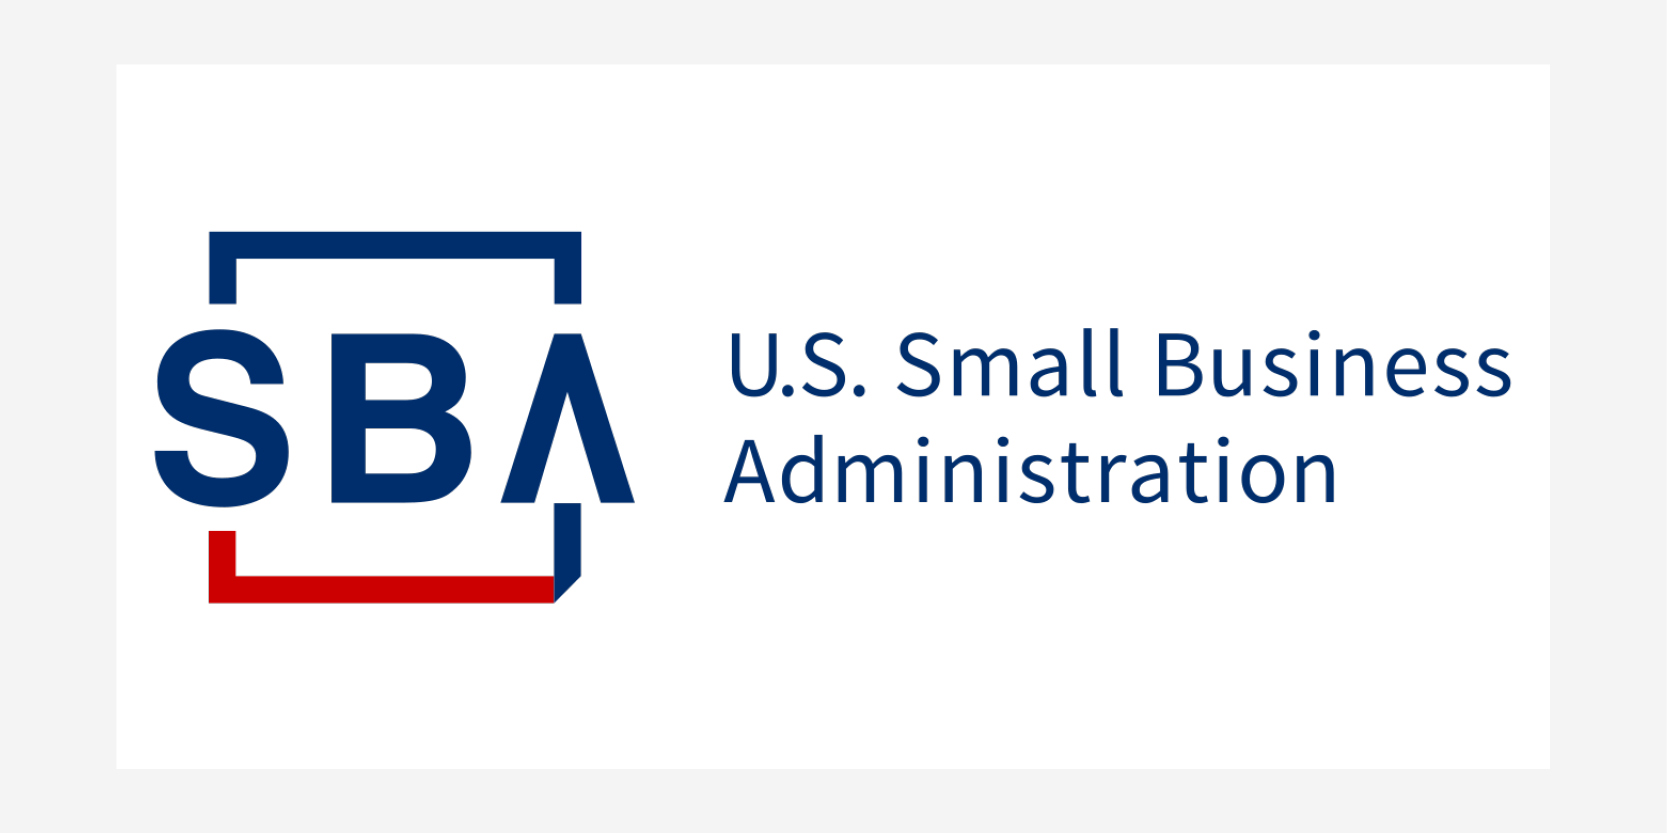  U.S. Small Business Association (SBA) logo